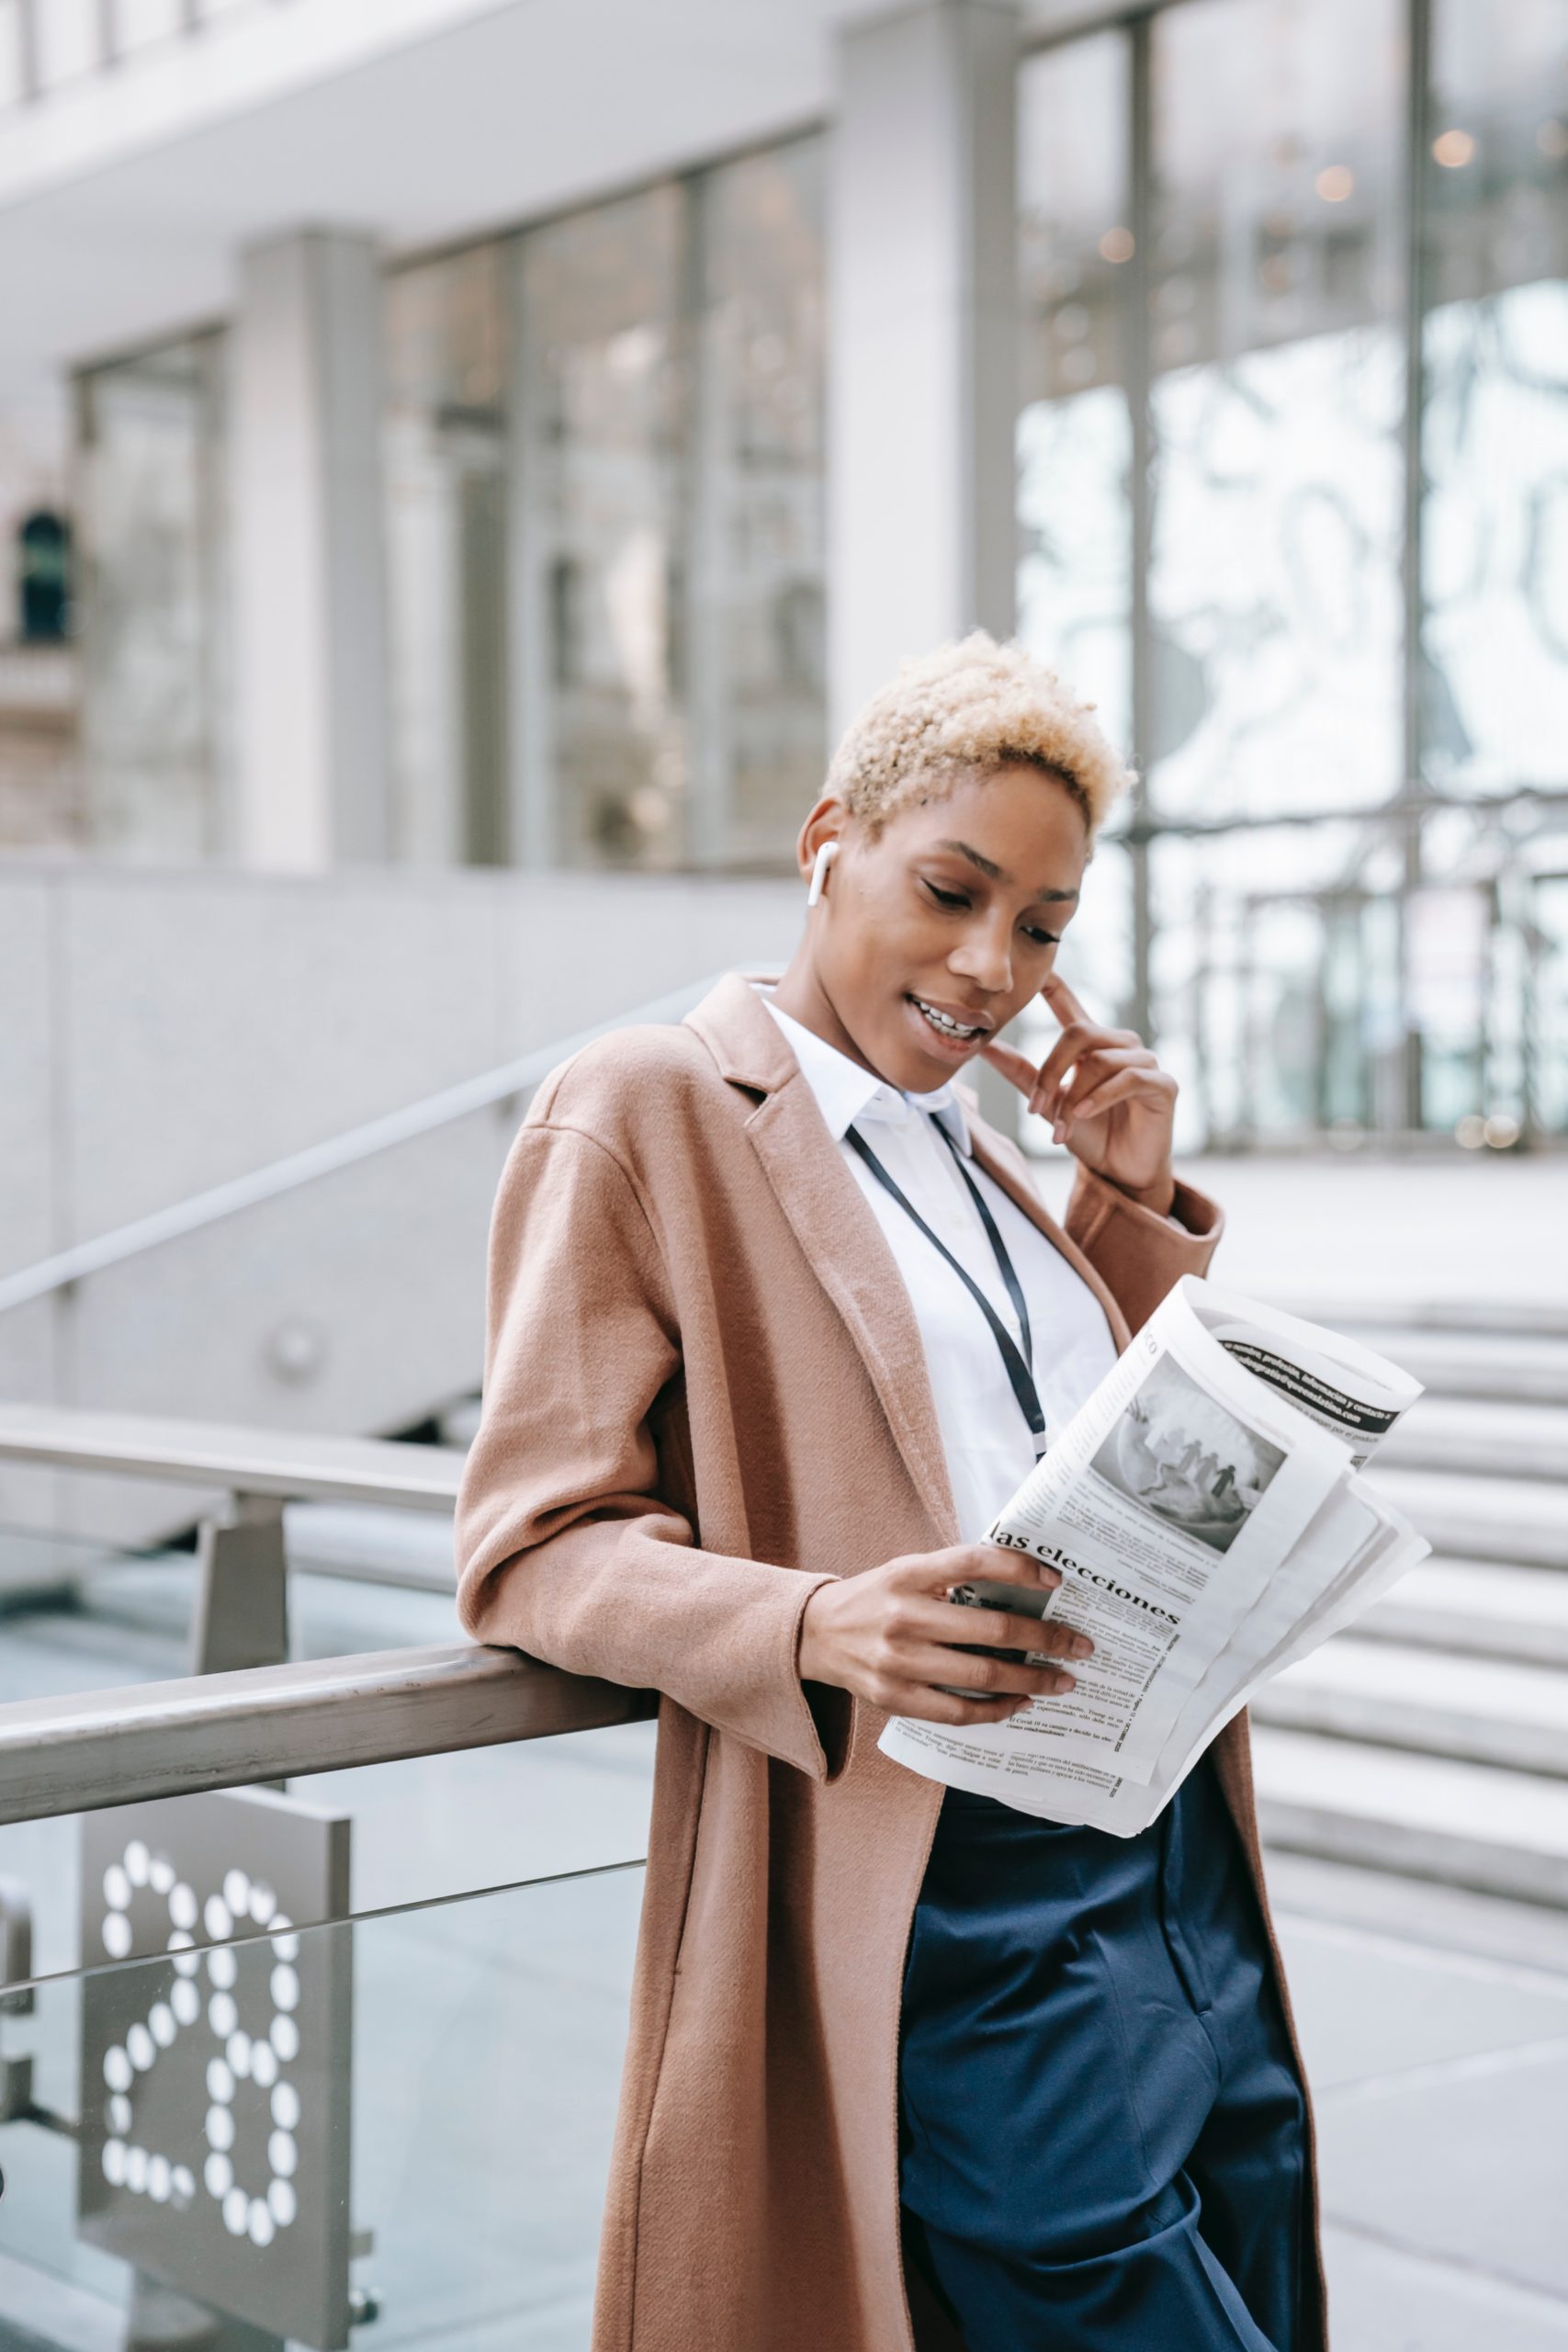 Black woman outside reading a newspaper